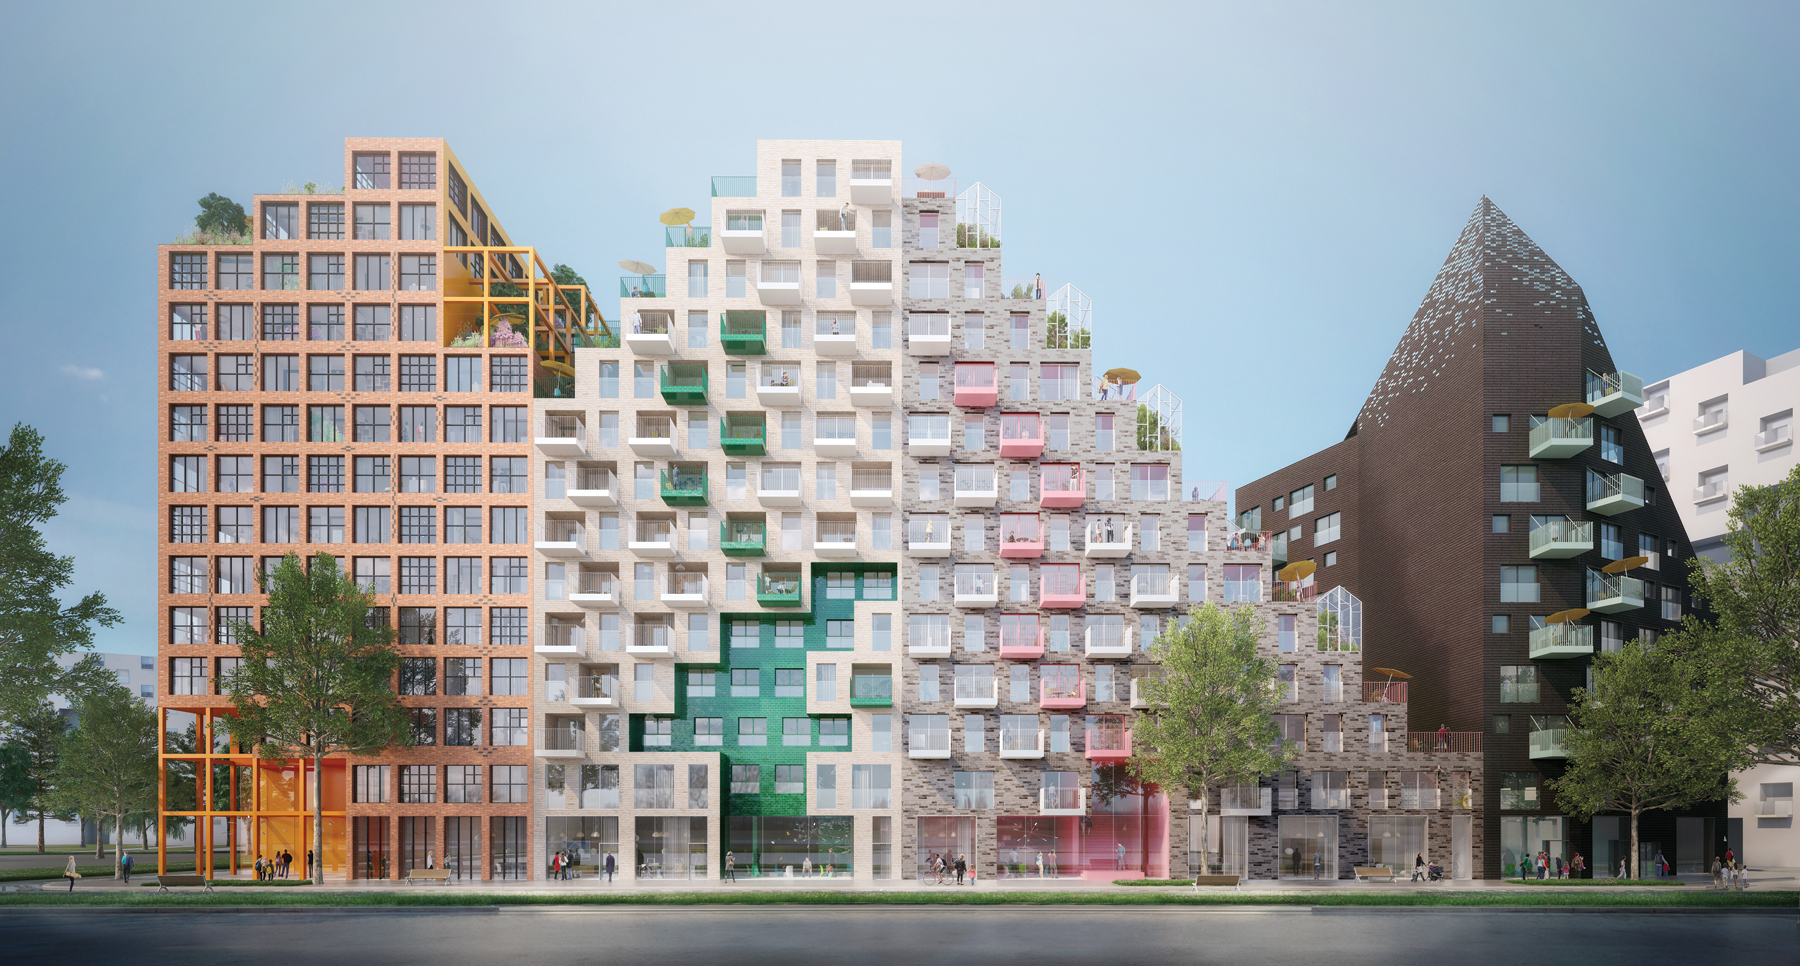 Manuelle Gautrand Futuristic Housing Block for Amsterdam